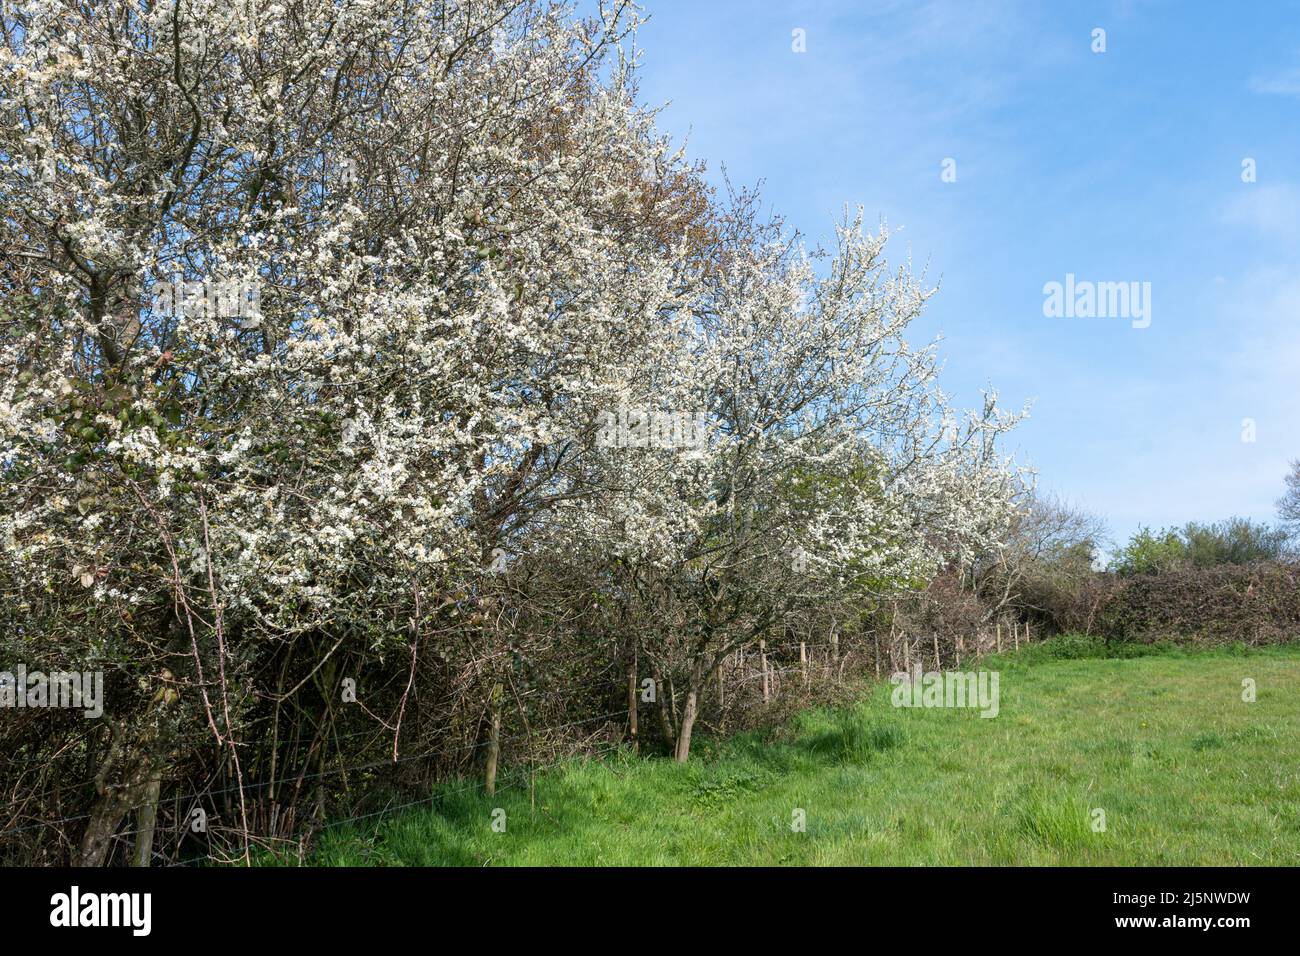 Blackthorn hedge in blossom during April, Dorset, England, UK. Flowering Prunus spinosa. Stock Photo